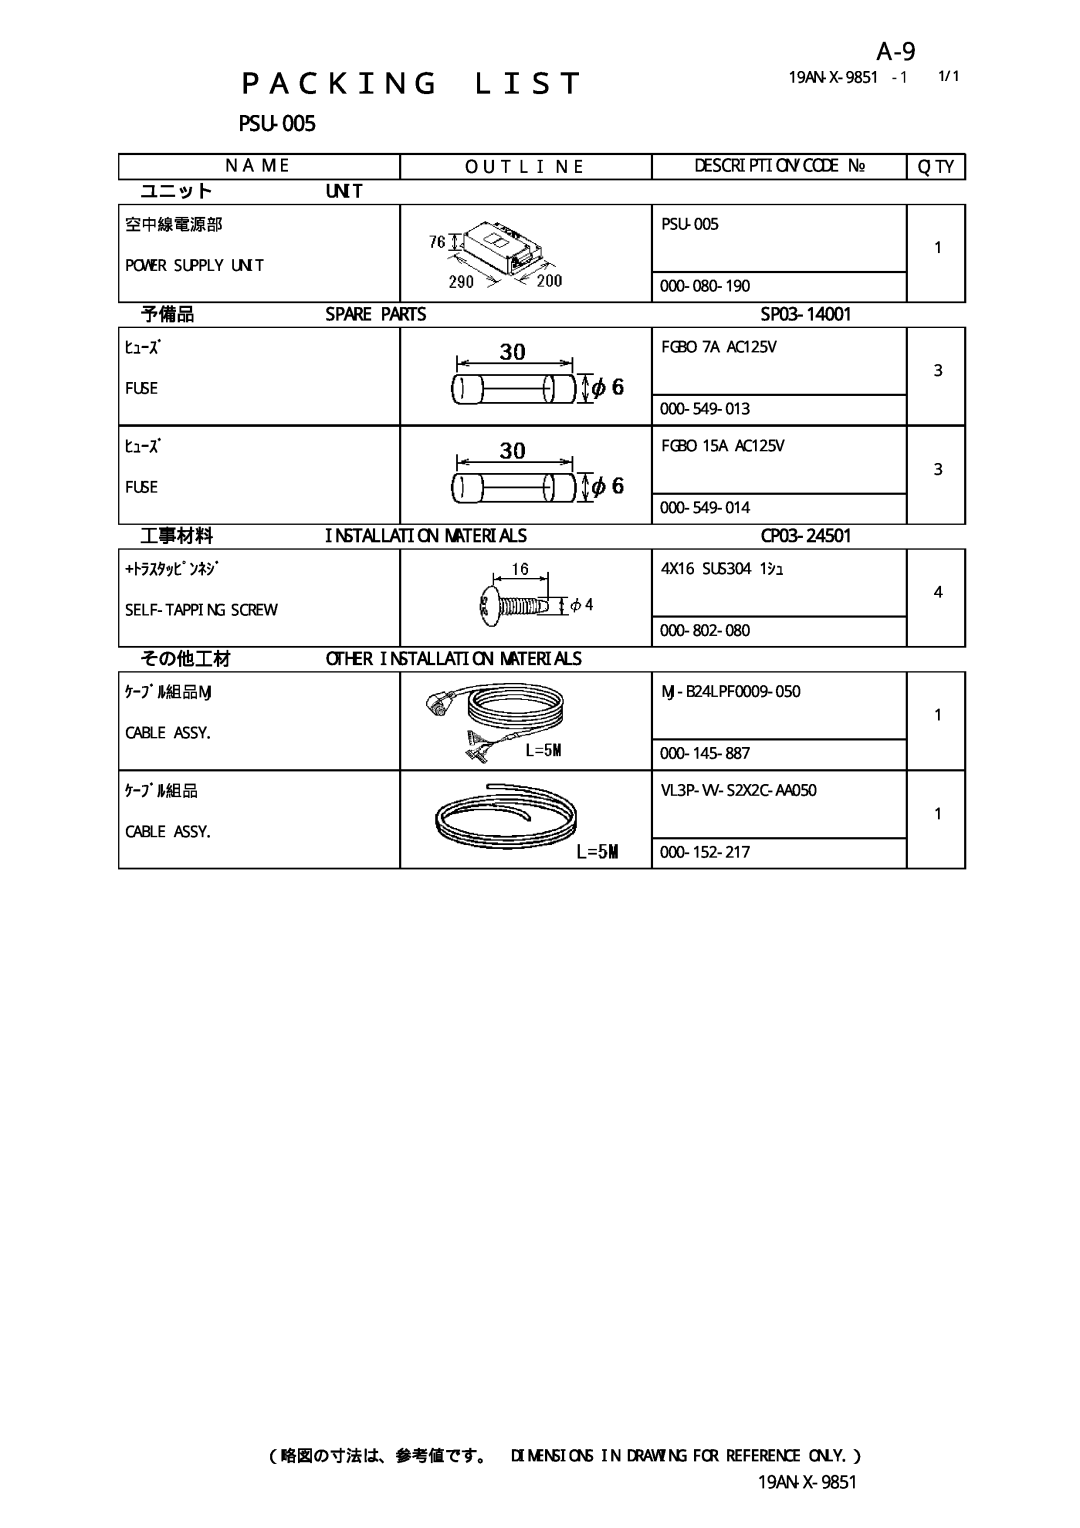 Furuno 1943C Ｐａｃｋｉｎｇ, Ｌｉｓｔ, PSU-005, N A M E, O U T L I N E, Description/Code, ユニットunit, Spare Parts, SP03-14001, 工事材料 